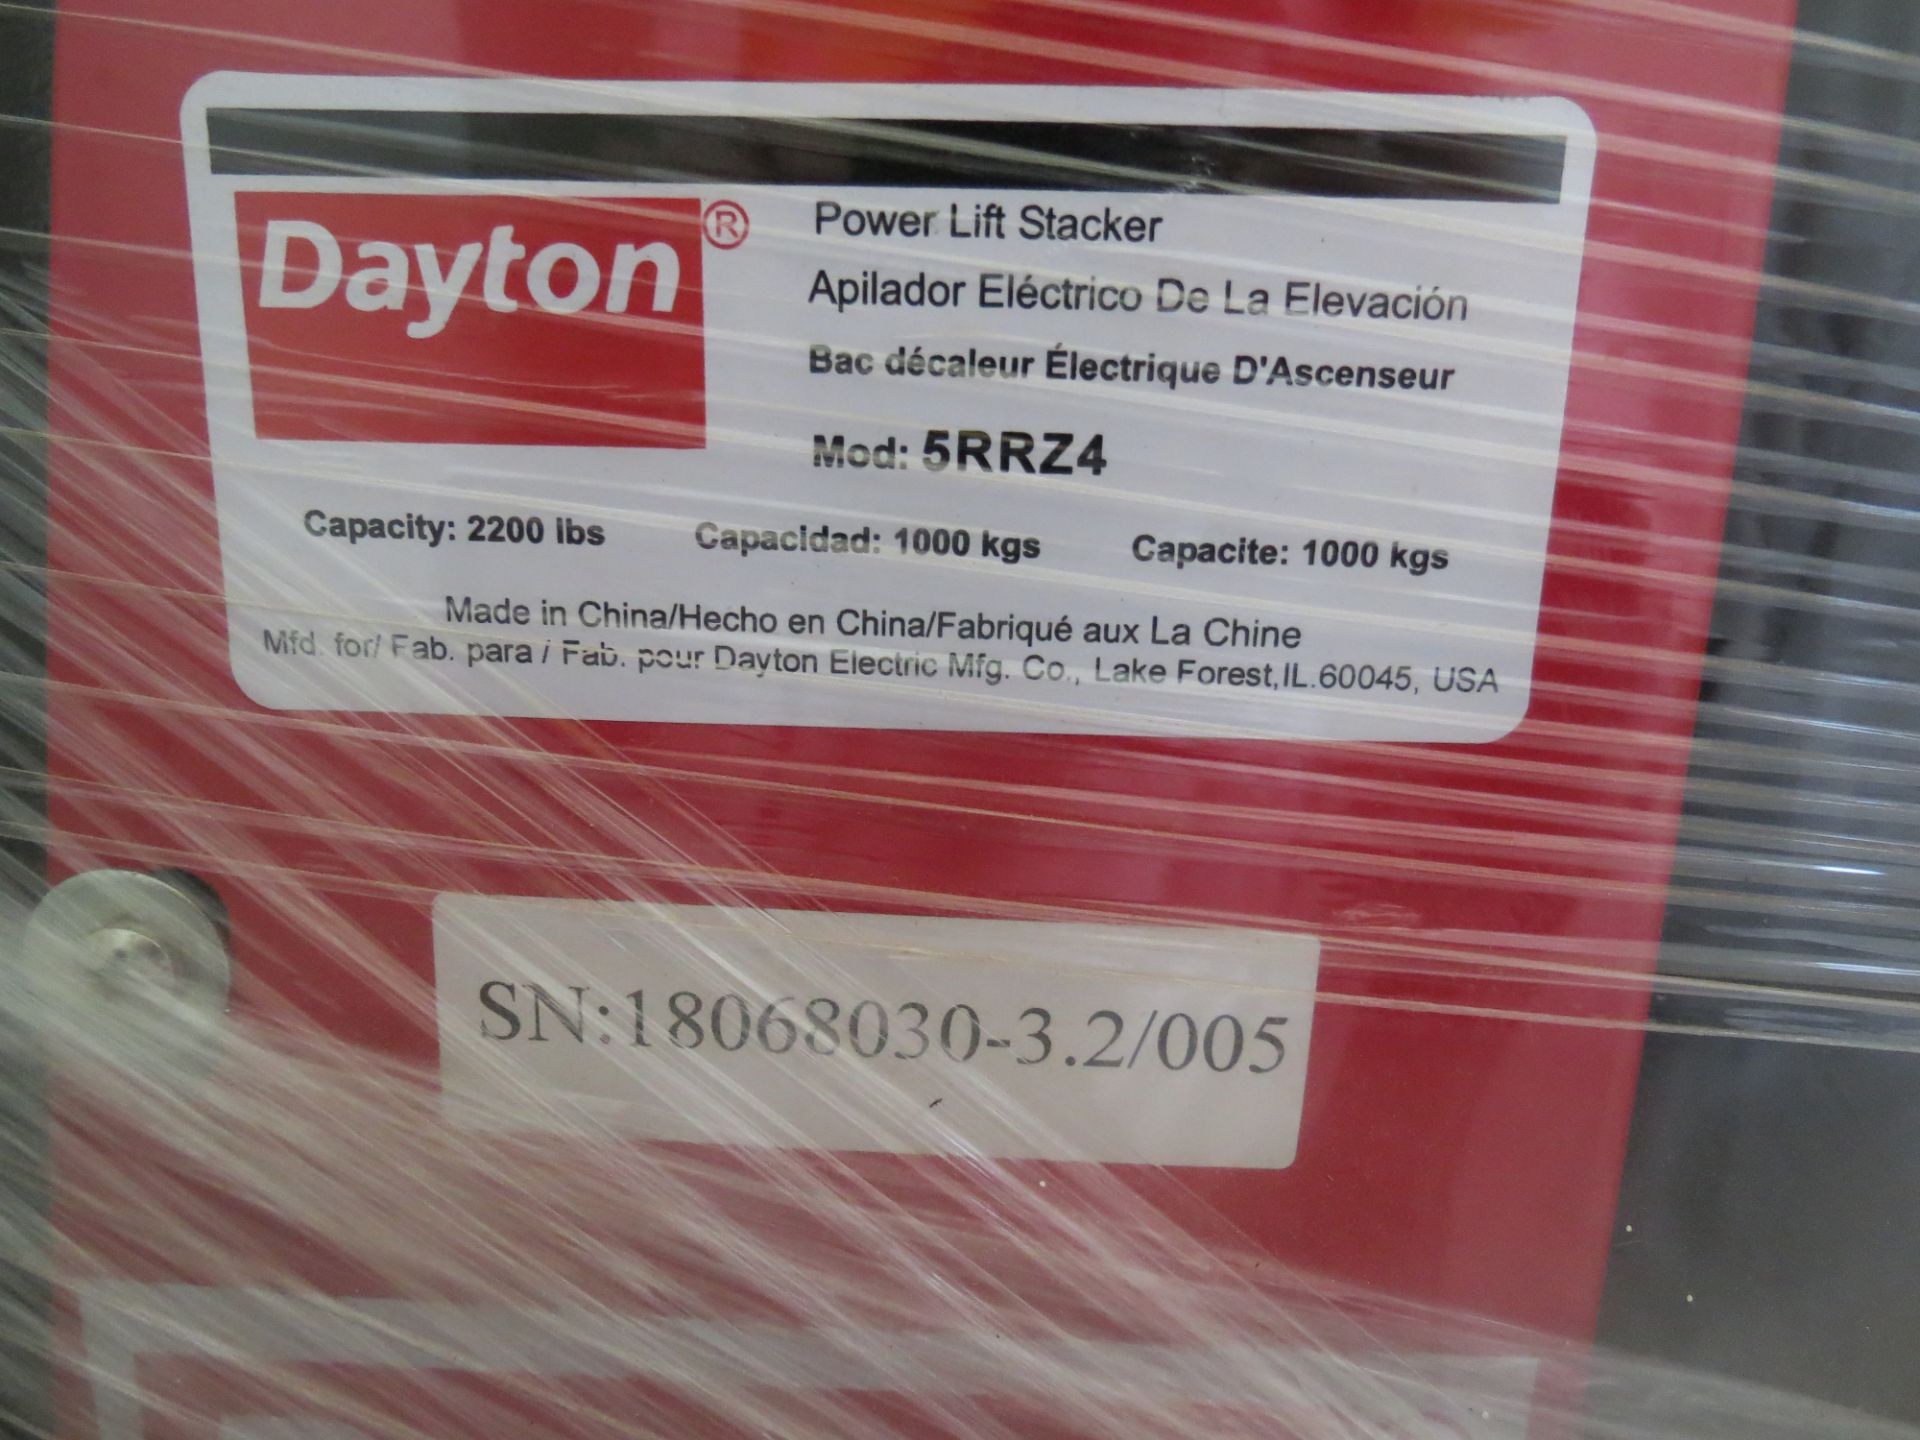 Dayton Pallet Lift / Stacker, Model 5RRZ4, S/N18068030-3.2/005, 2,200 LB / 1,000 KG Capacity - Image 6 of 7